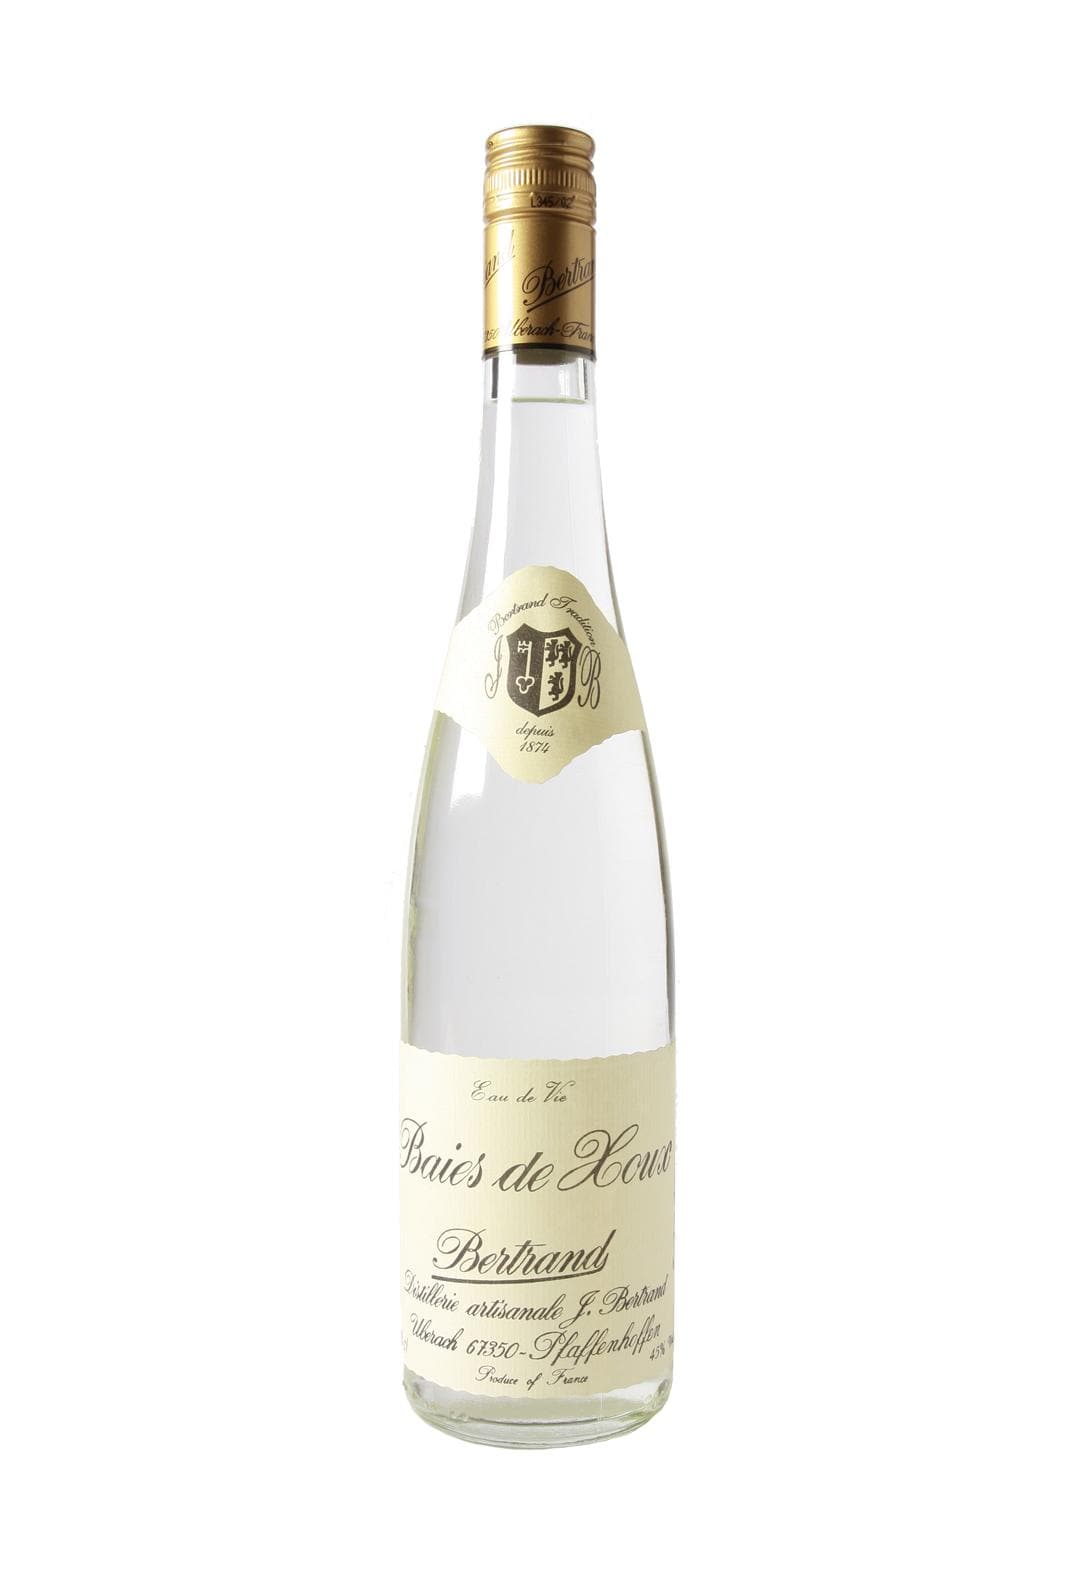 Bertrand Eau de Vie de Baies de Houx (Holly Berry) 45% 700ml | Liqueurs | Shop online at Spirits of France